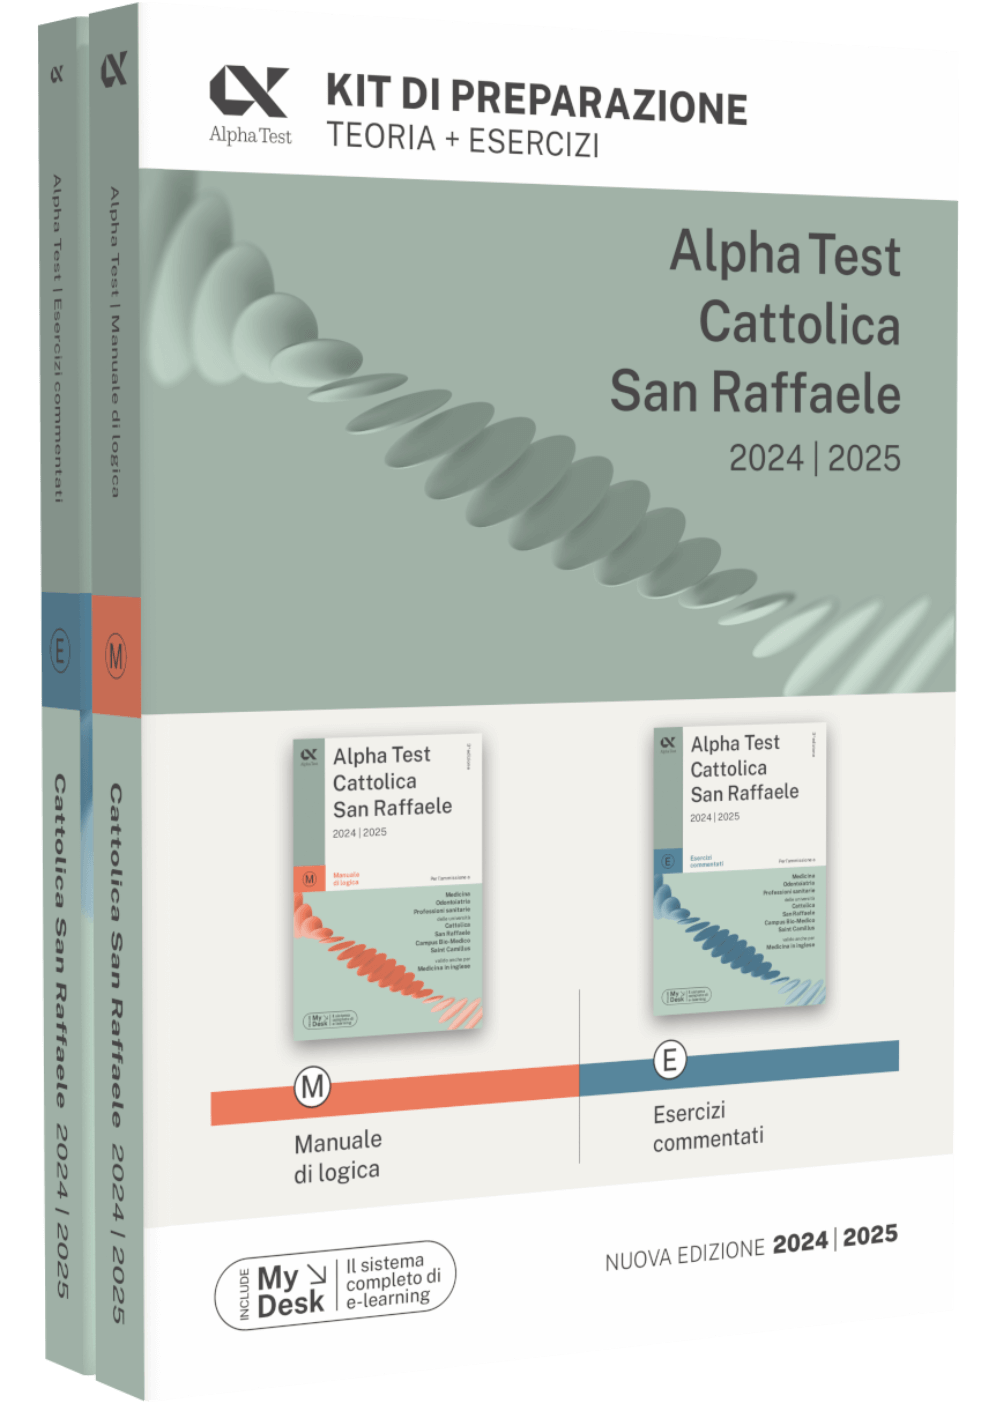 Alpha-Test-Cattolica-San-Raffaele-Kit-completo-di-preparazione-978-88-483-2668-1.png